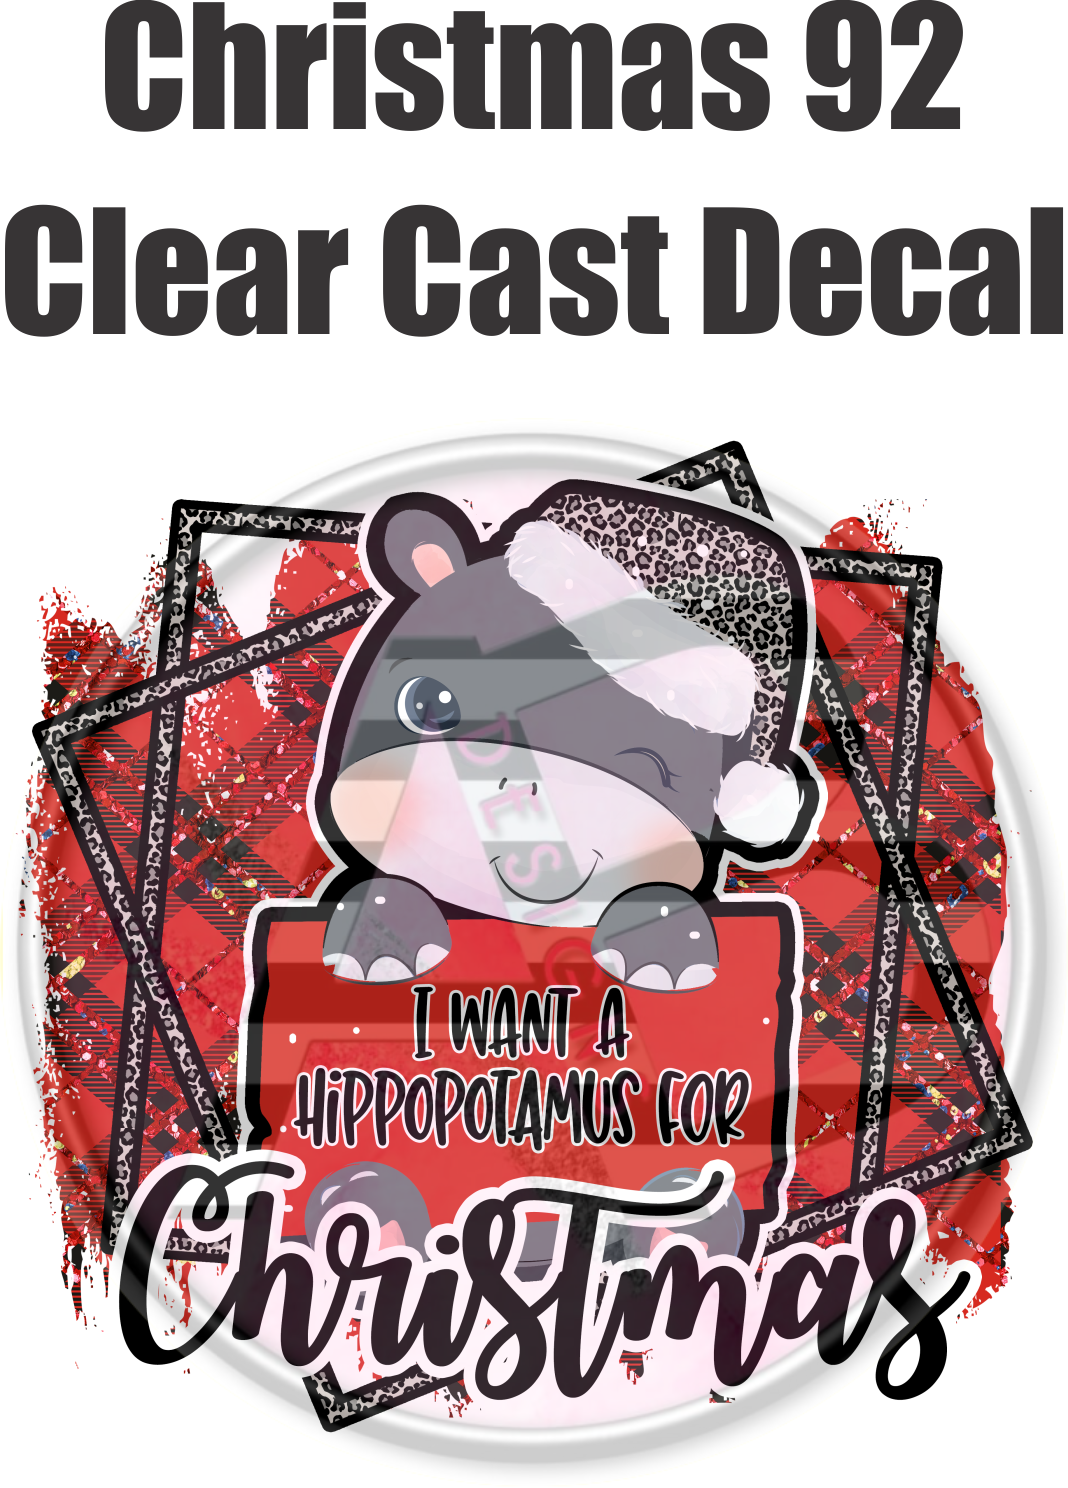 Christmas 92 - Clear Cast Decal